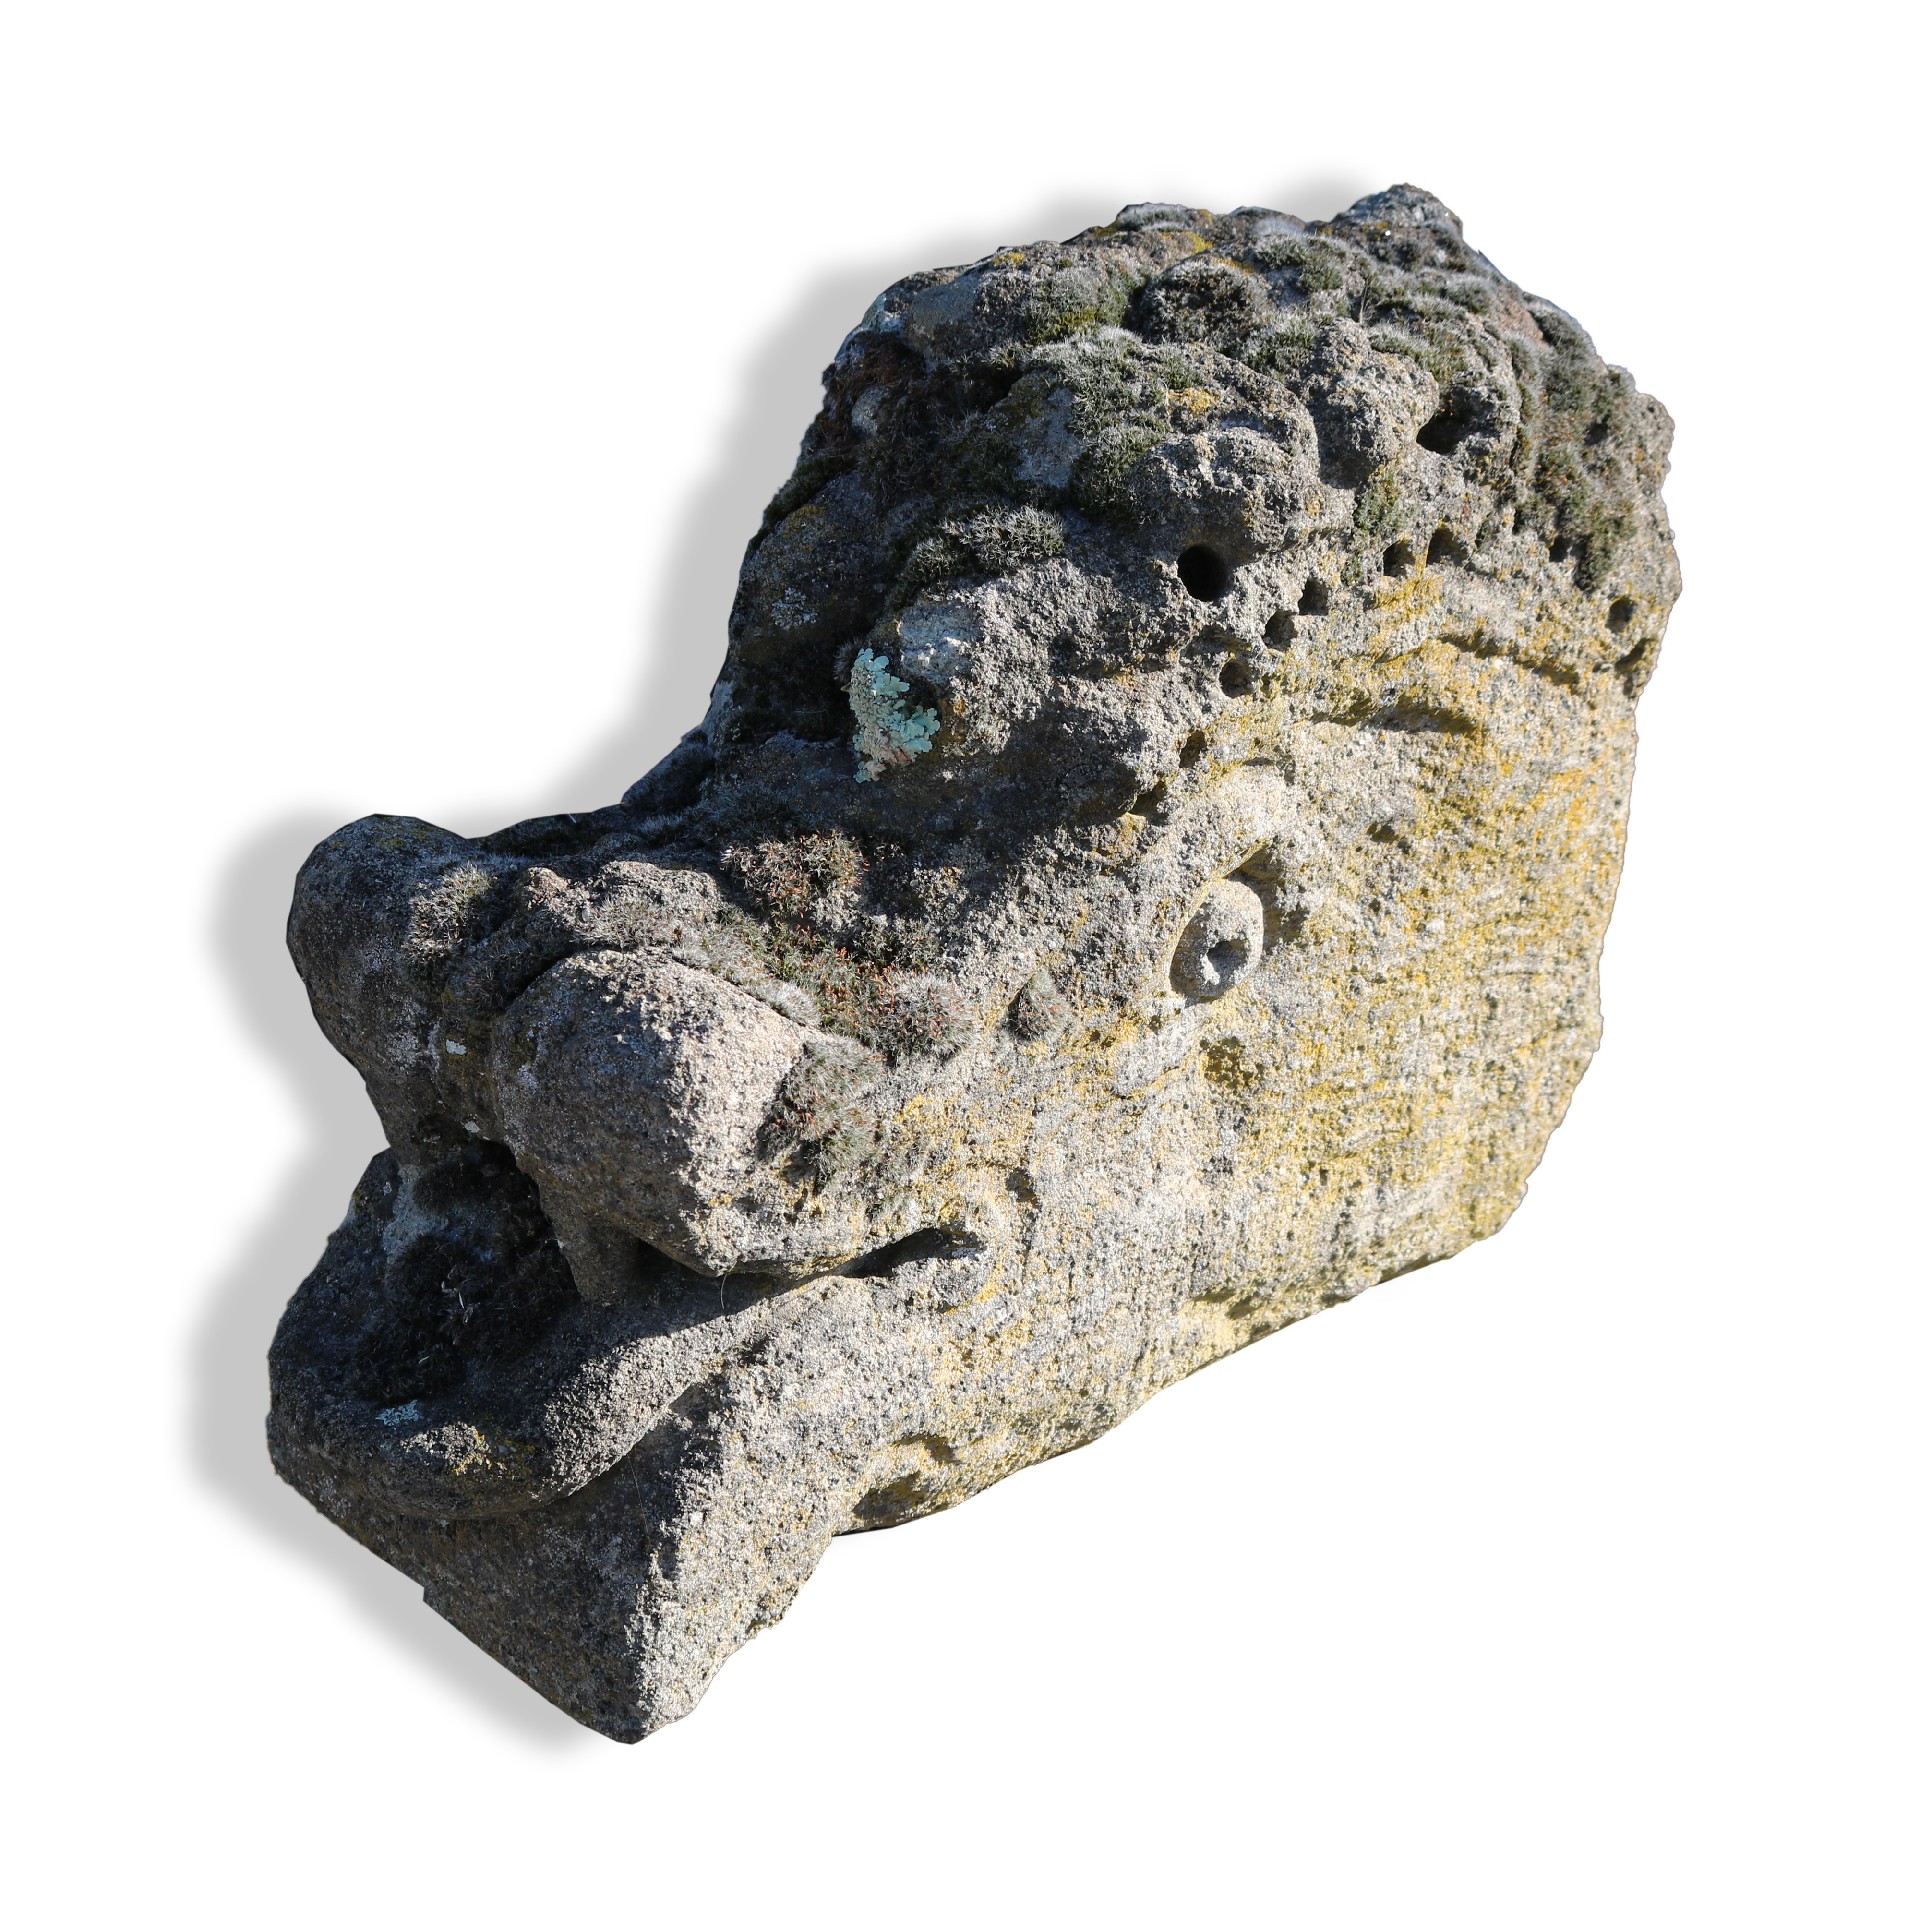 Antica scultura in pietra. - 1